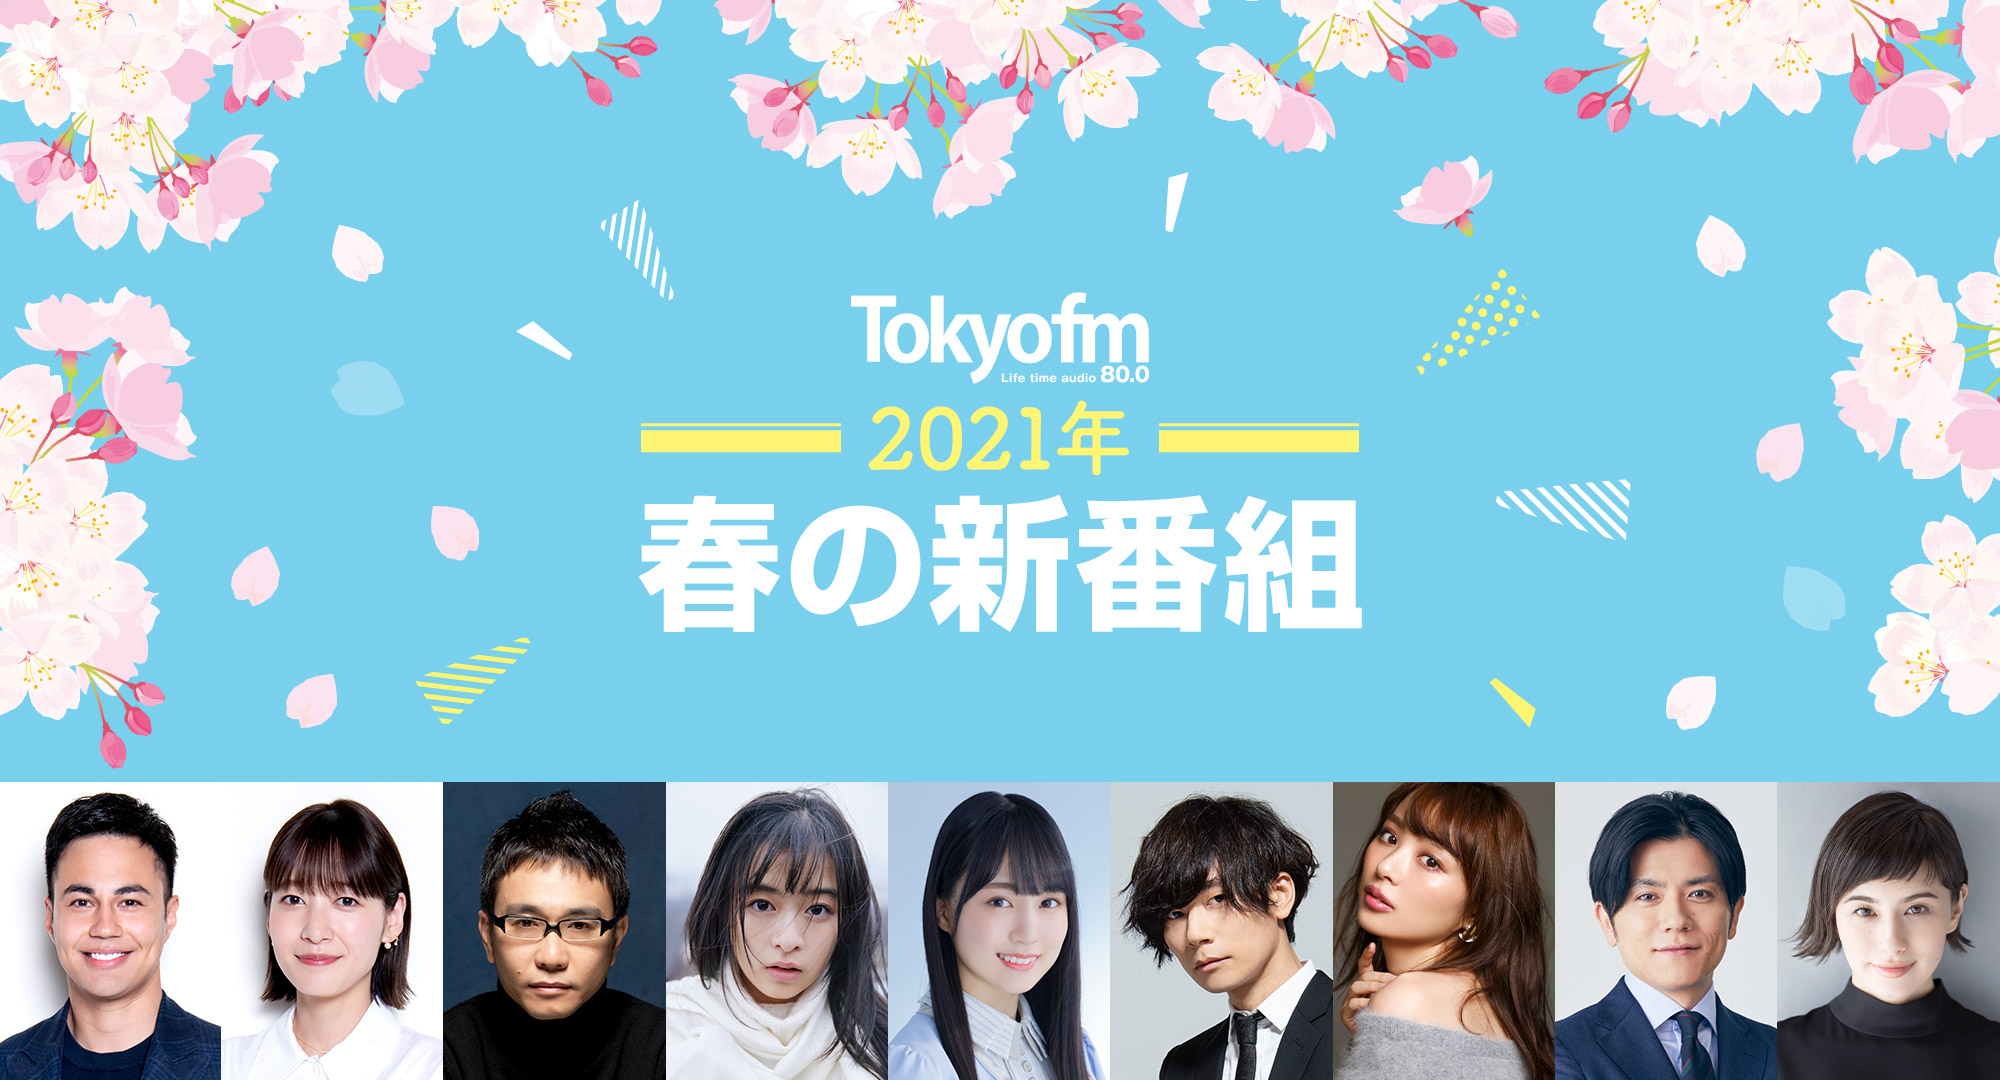 Tokyo Fm 21年春の番組改編 個性豊かな顔ぶれが Tokyo Fmに集結 ブランドプロミス Life Time Audio を共に奏でる 春の新番組スタート Tokyo Fmのプレスリリース